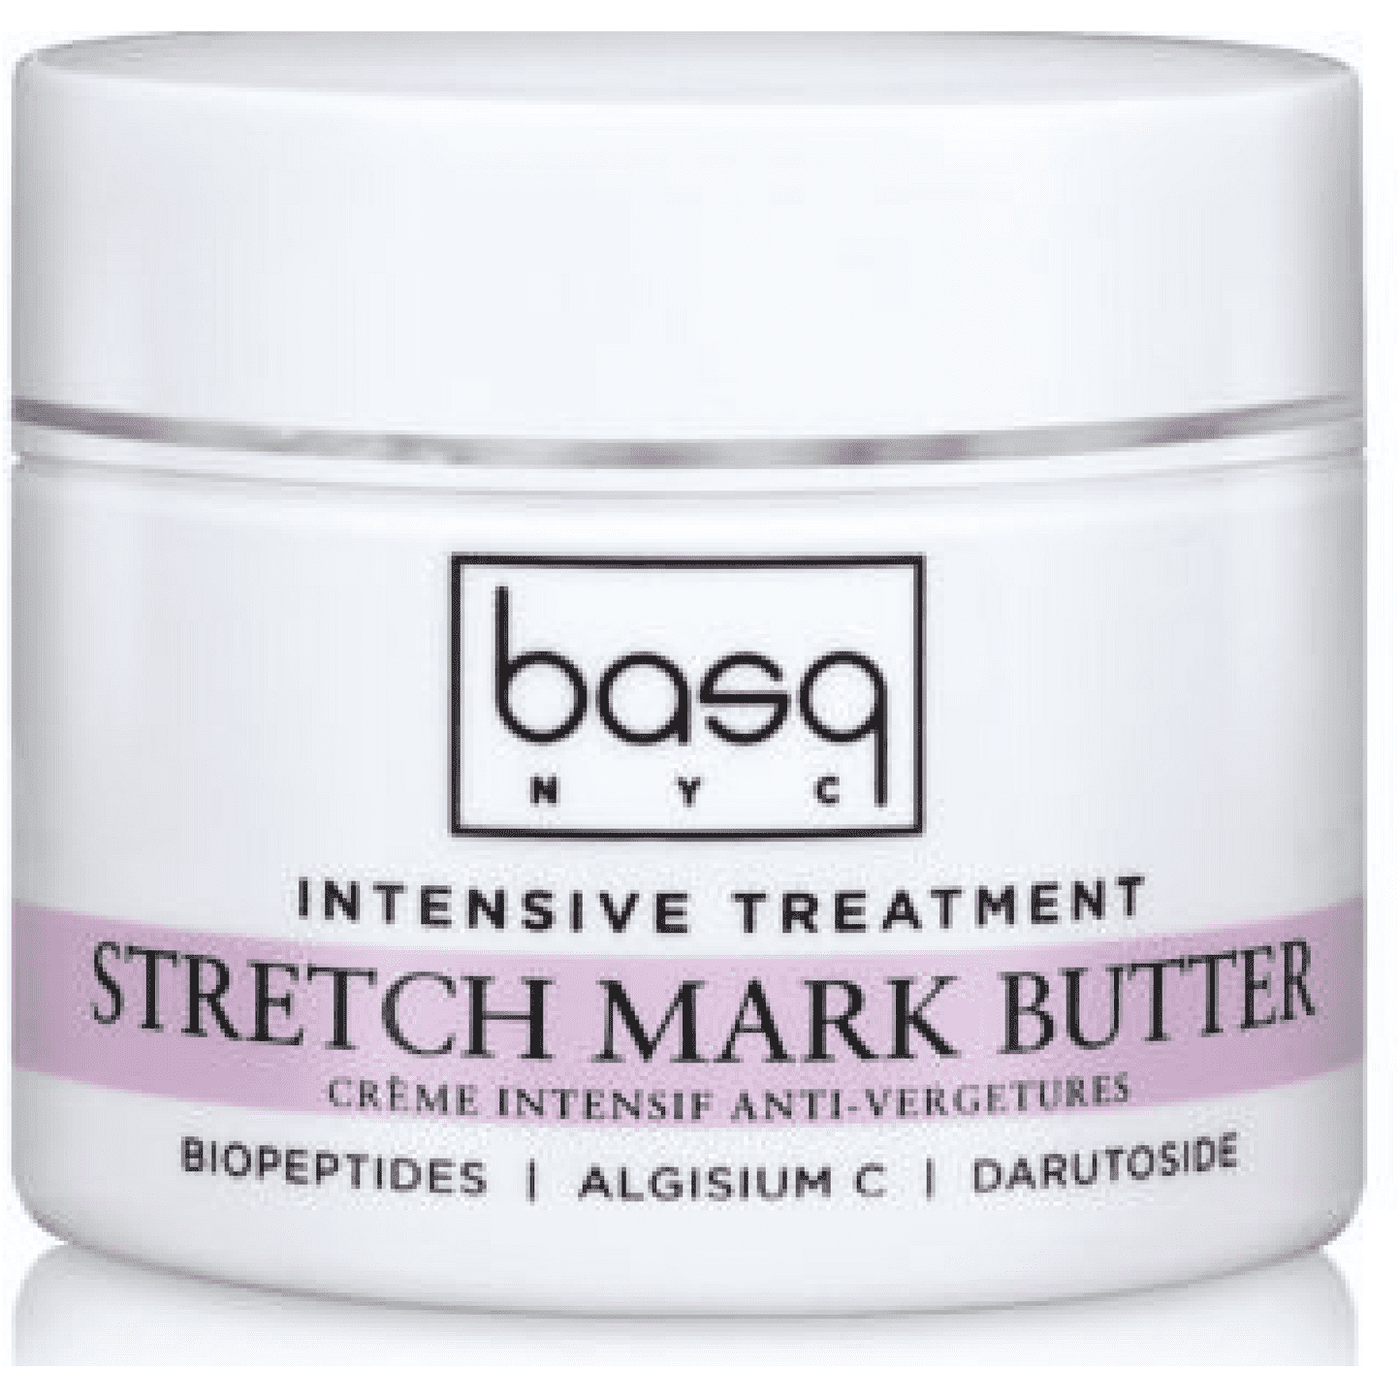 Intensive Treatment Stretch Mark Butter.